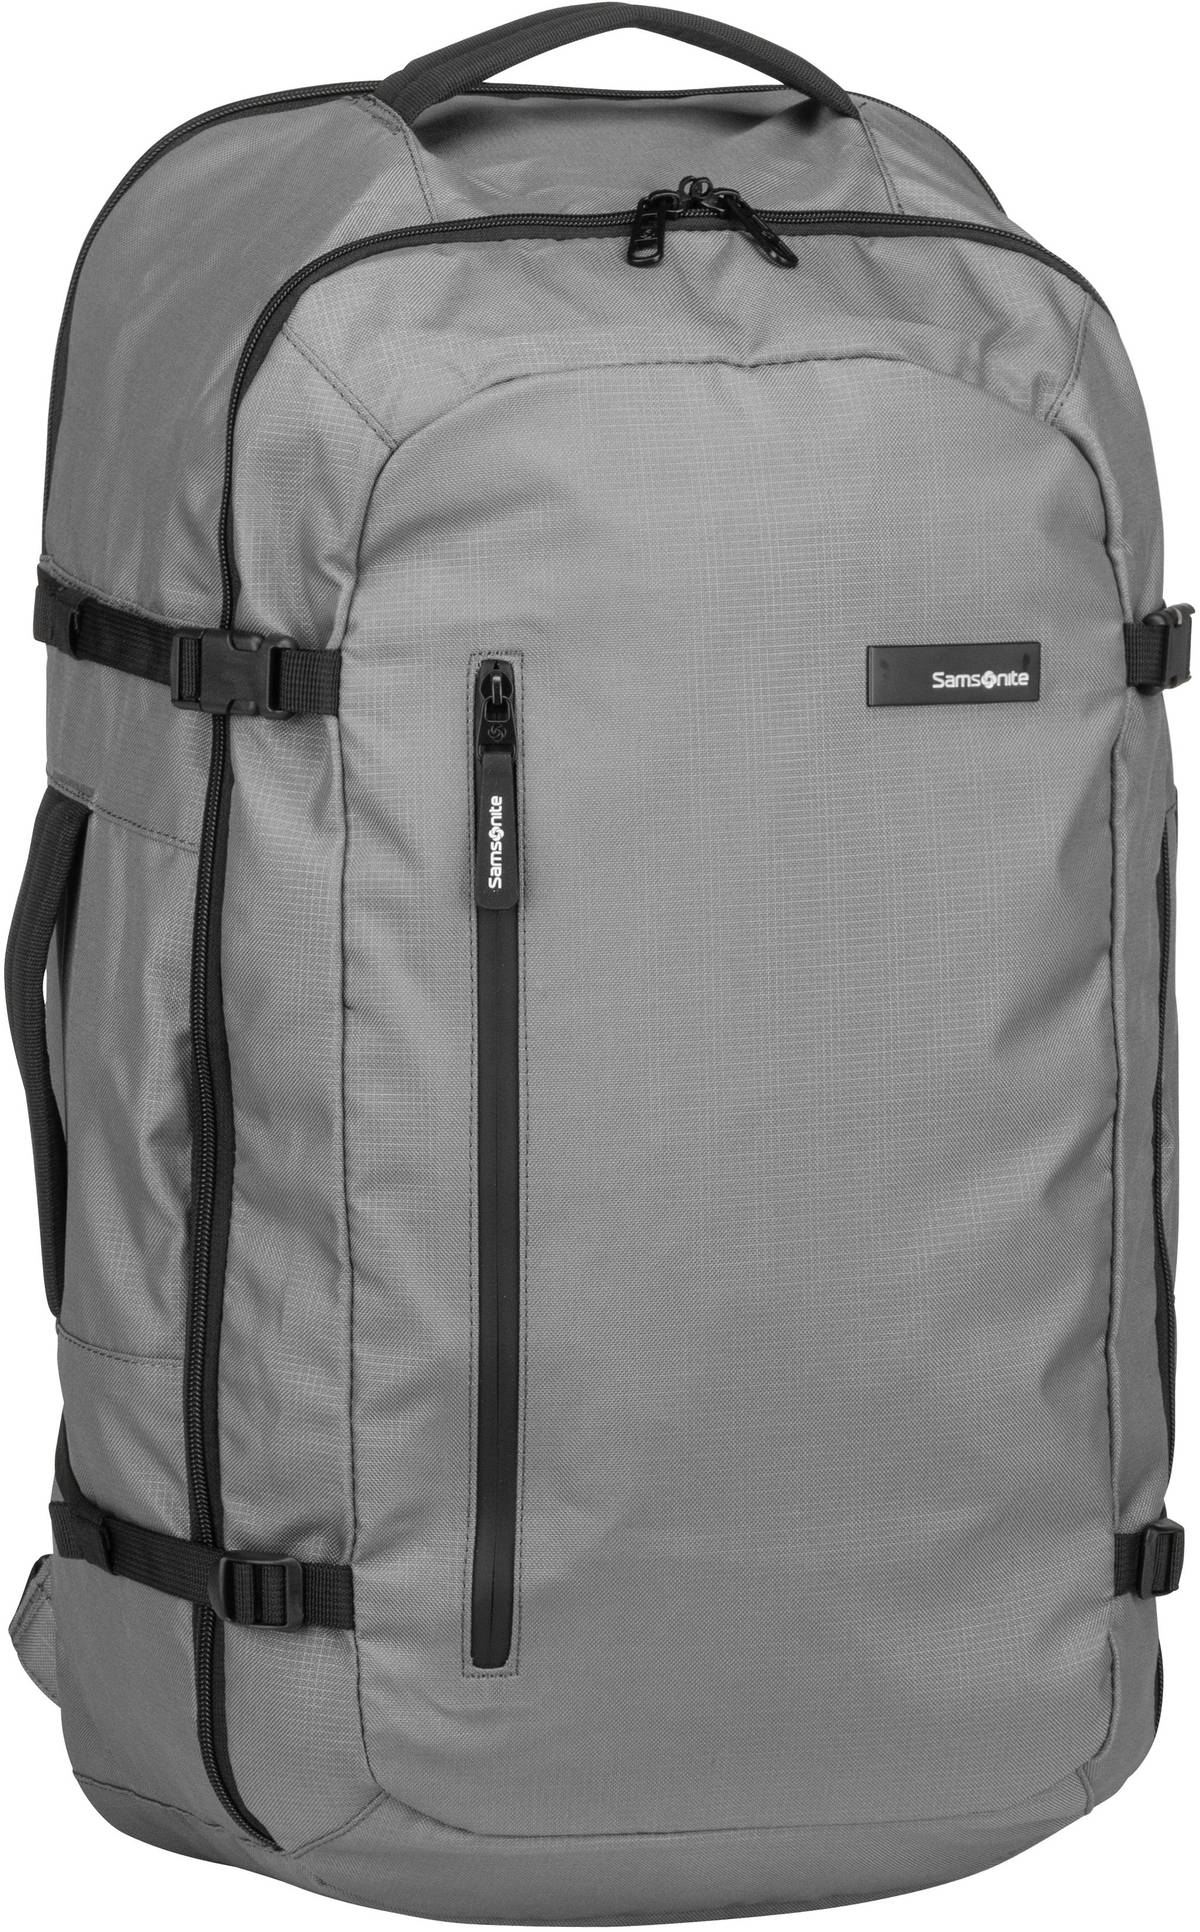 Samsonite Roader Travel Backpack M 55L  in Drifter Grey (55 Liter), Rucksack / Backpack